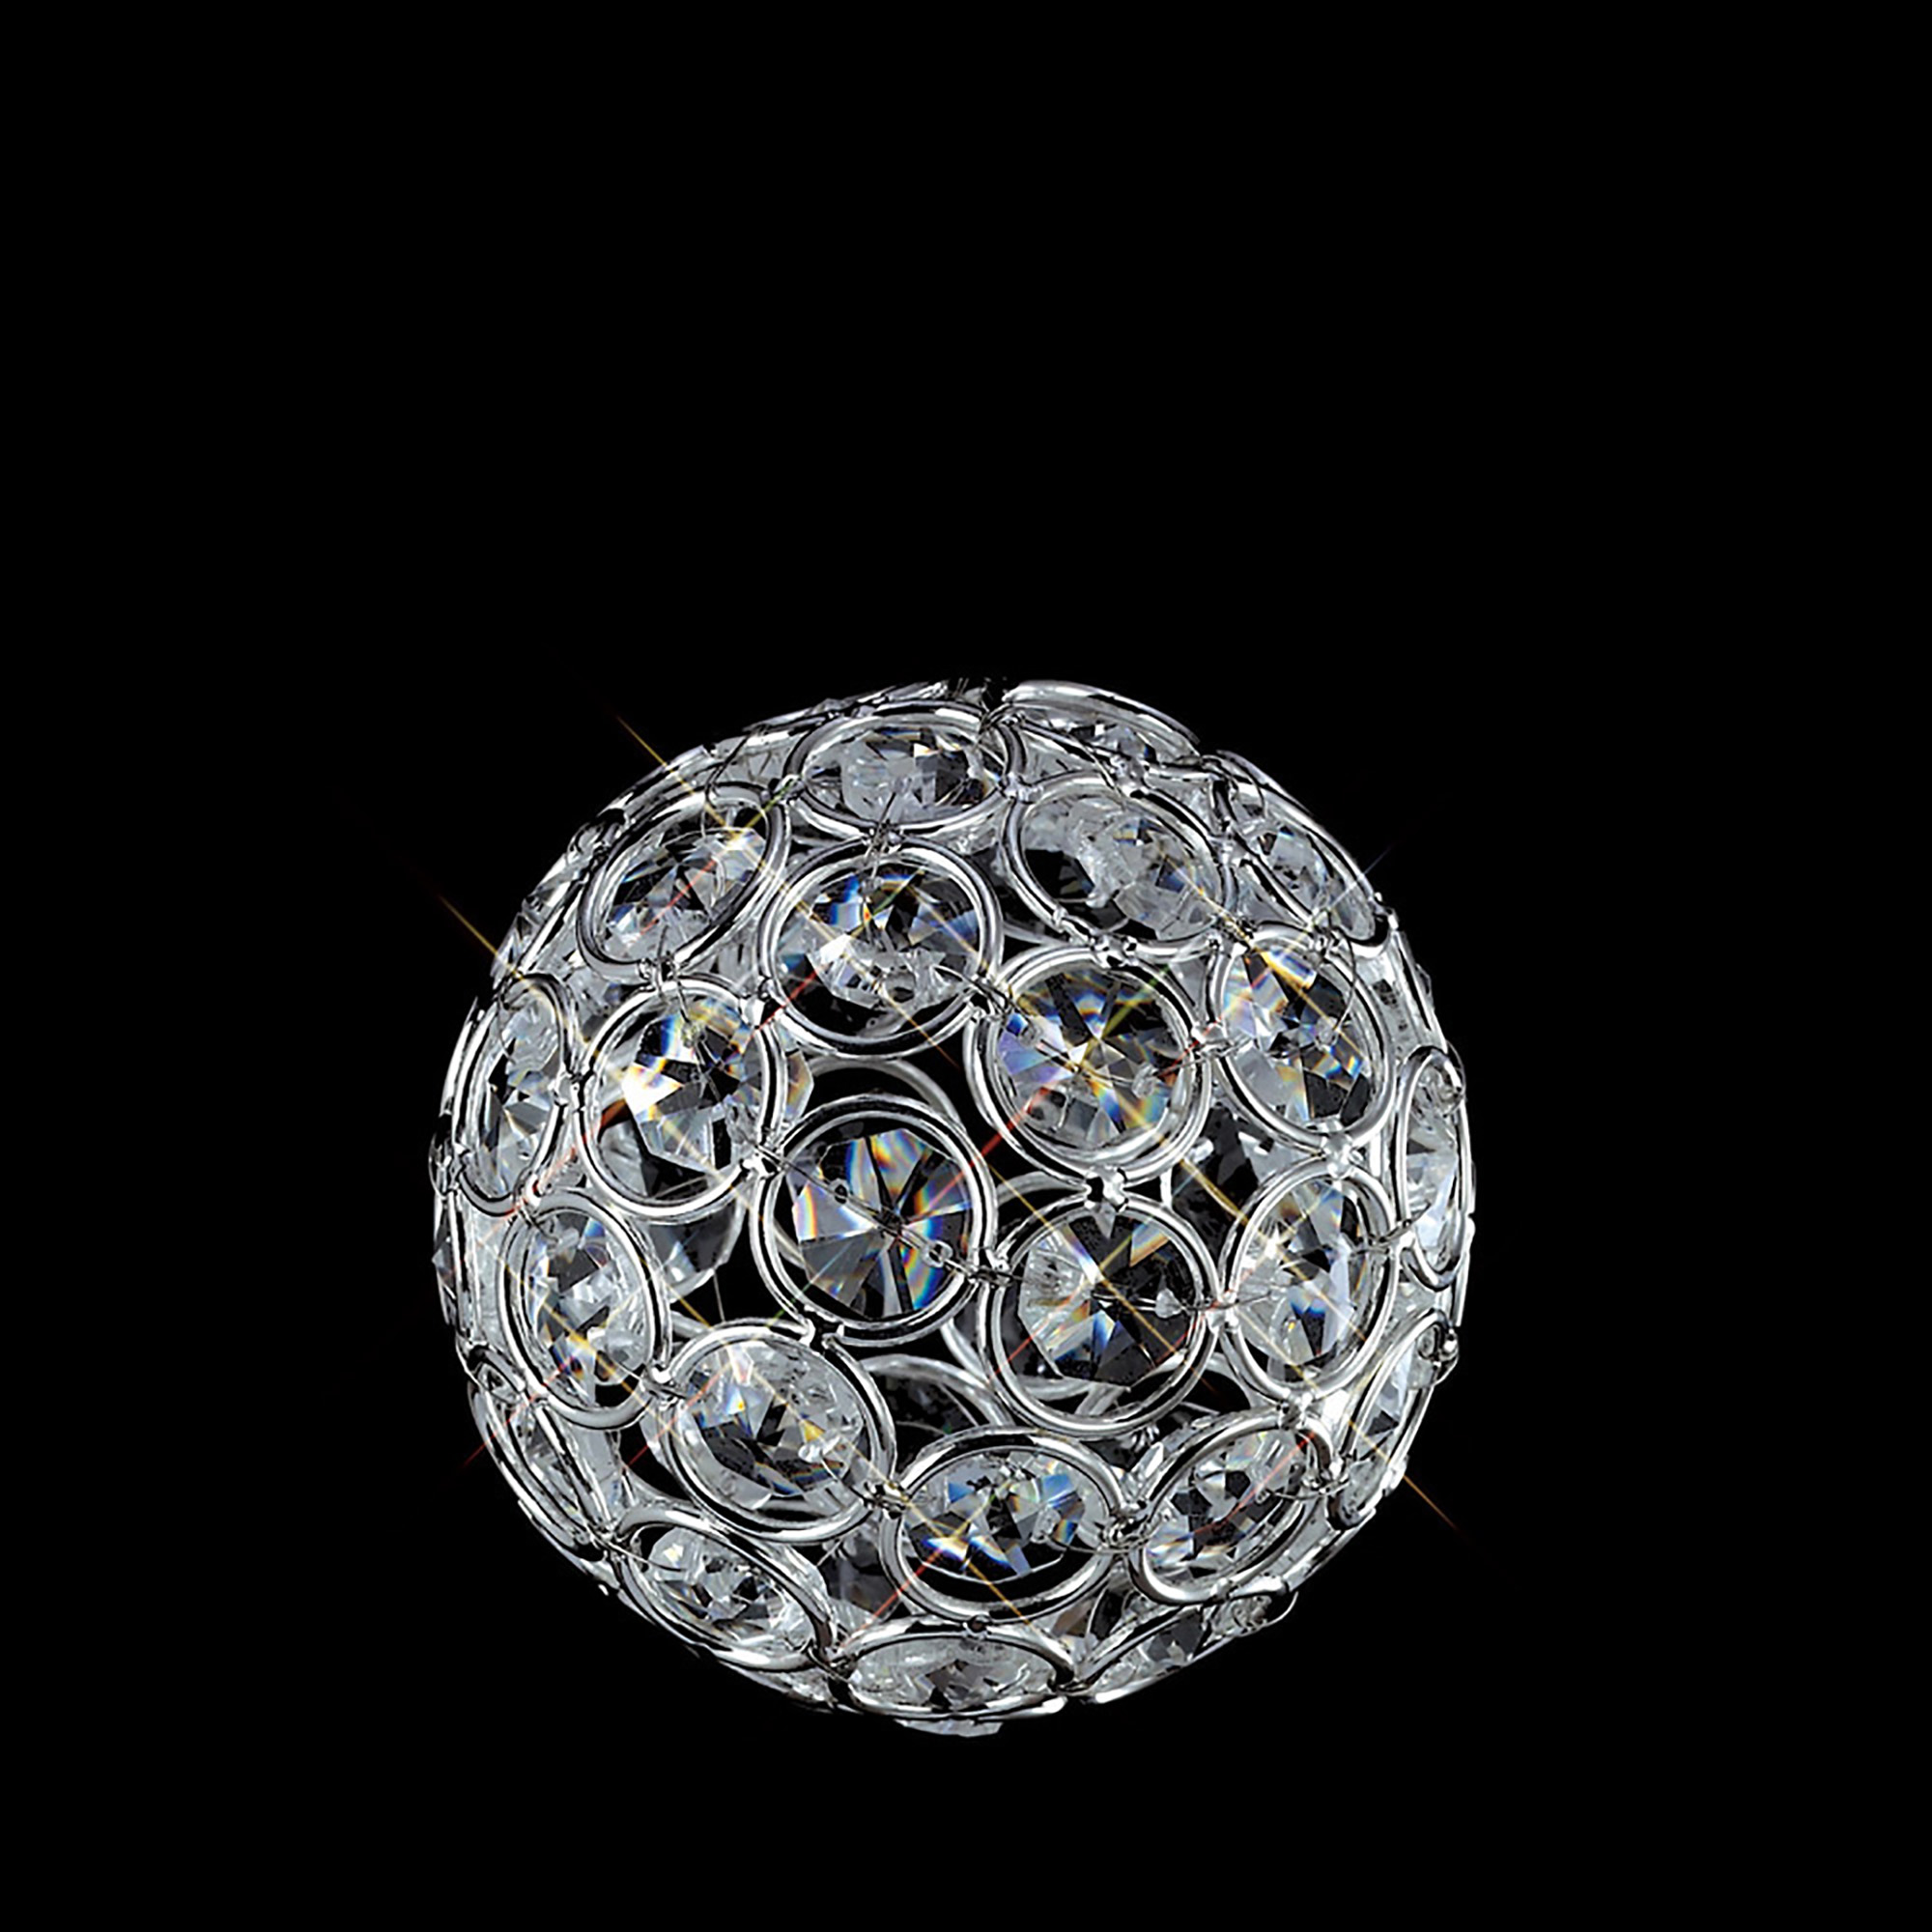 Malo Crystal Accessories Diyas Home Decorative Balls